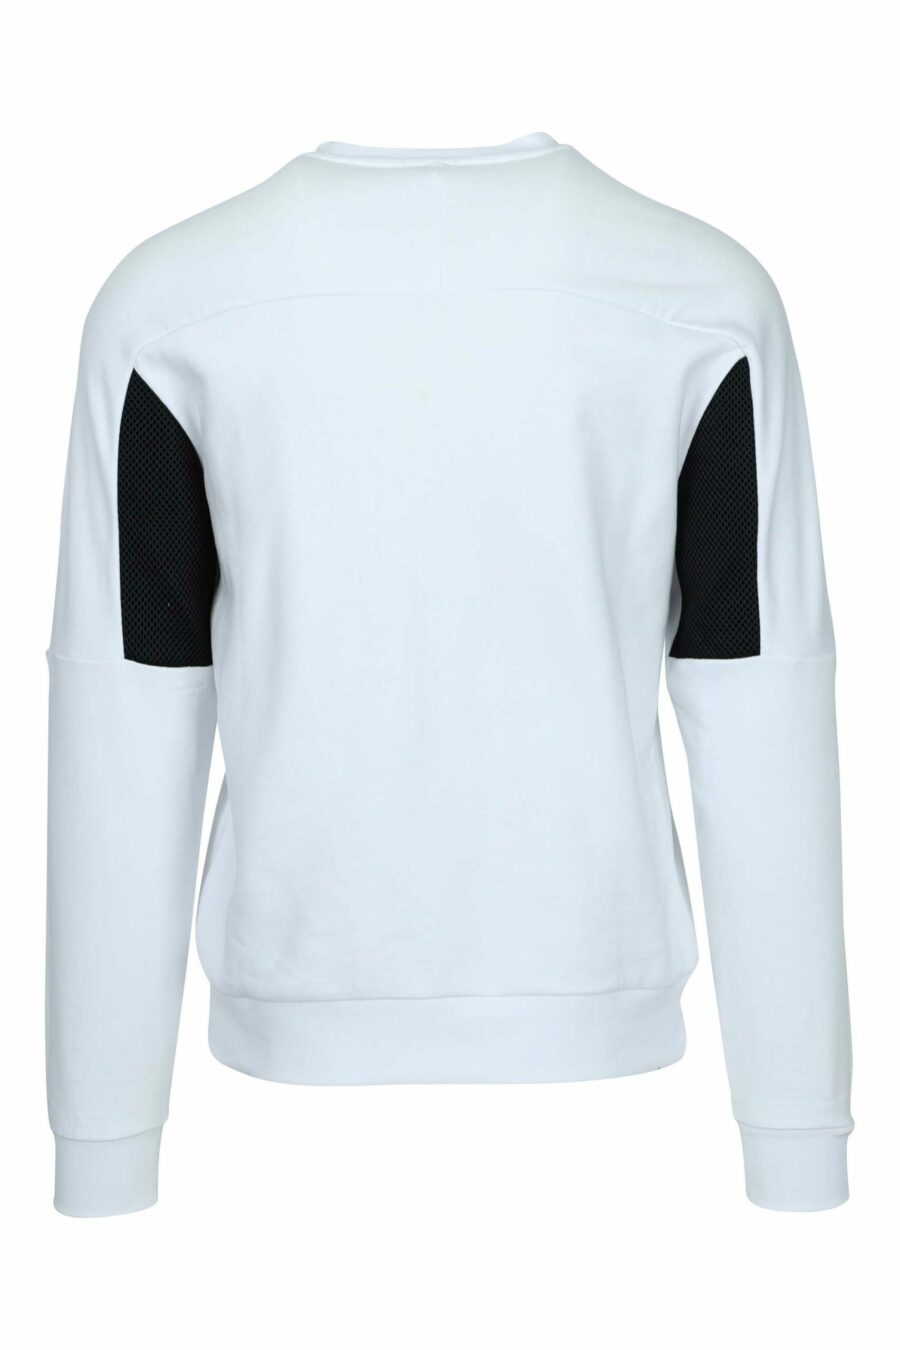 White sweatshirt with "lux identity" minilogue on monochrome ribbon - 8058947443338 1 scaled